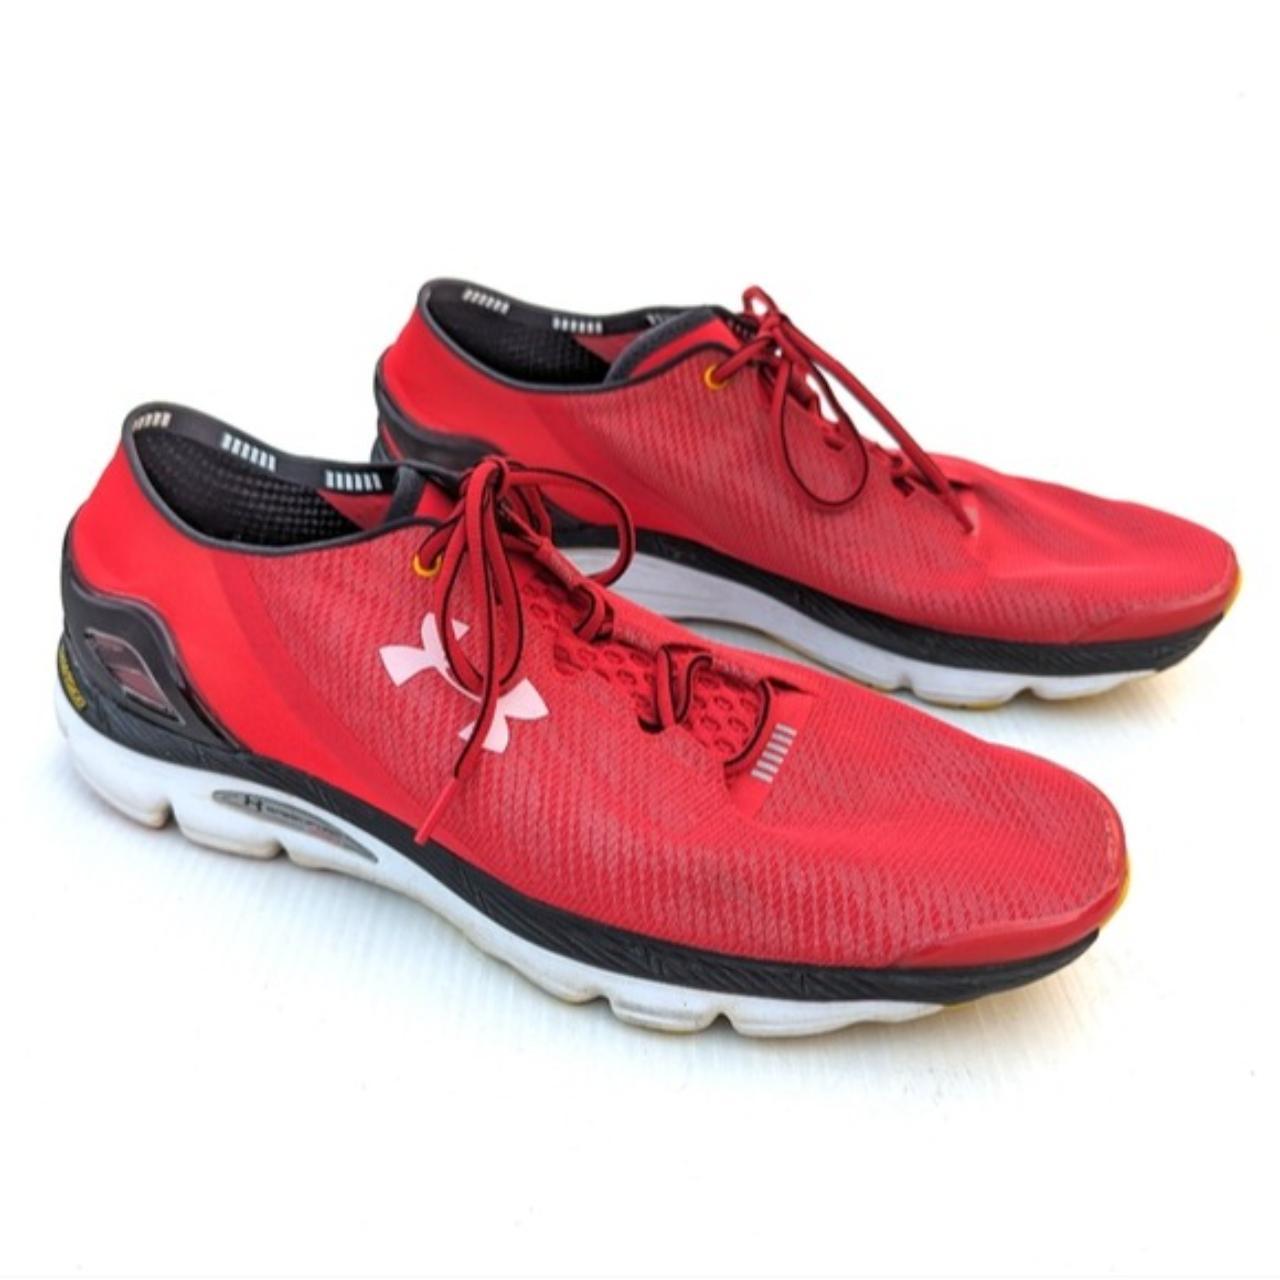 Under Armour Mens Speedform Velociti 1298572-600 Red Running Shoes